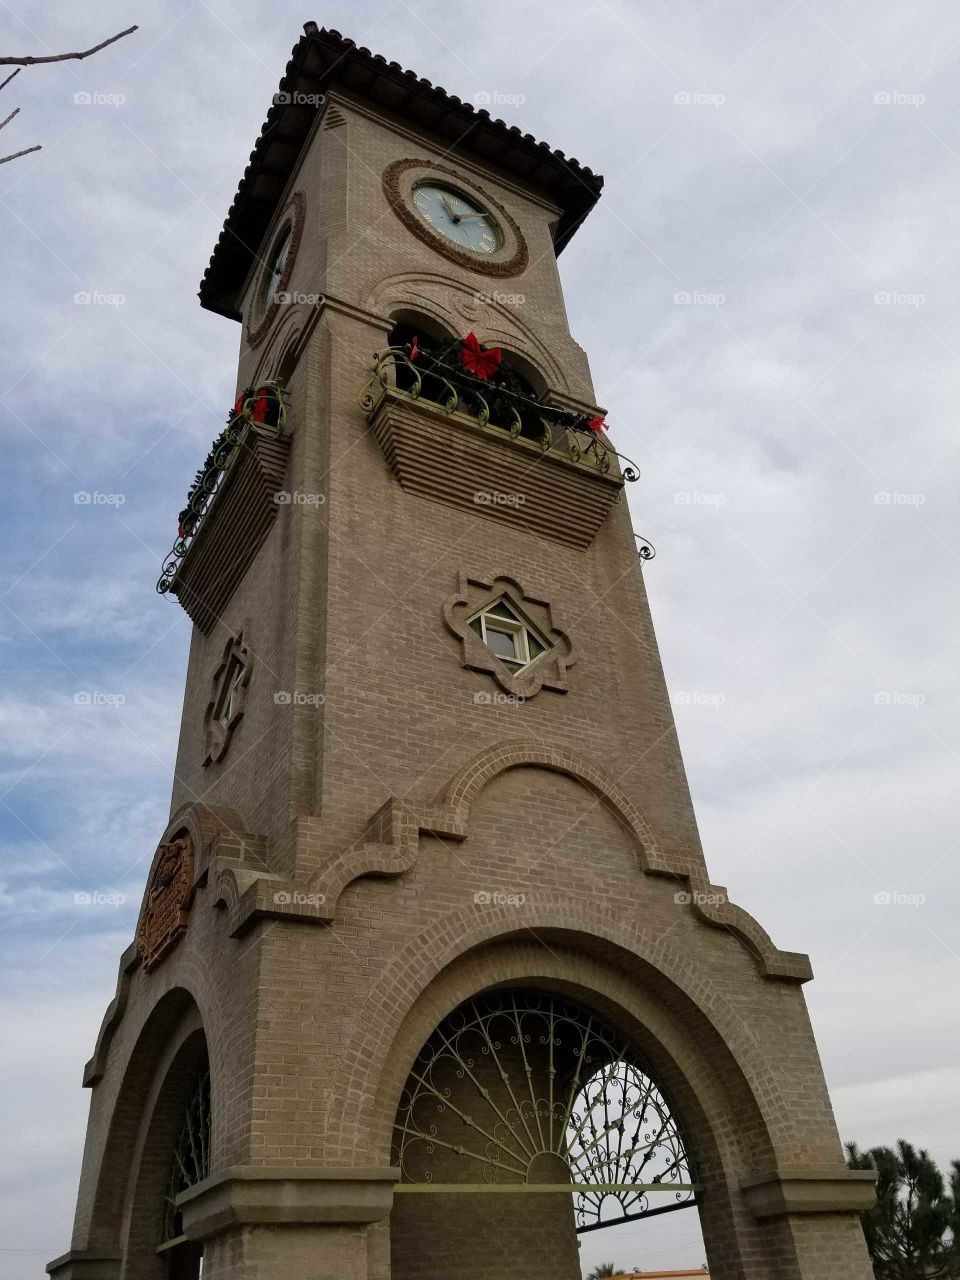 Beale Memorial Clock Tower in Bakersfield,CA